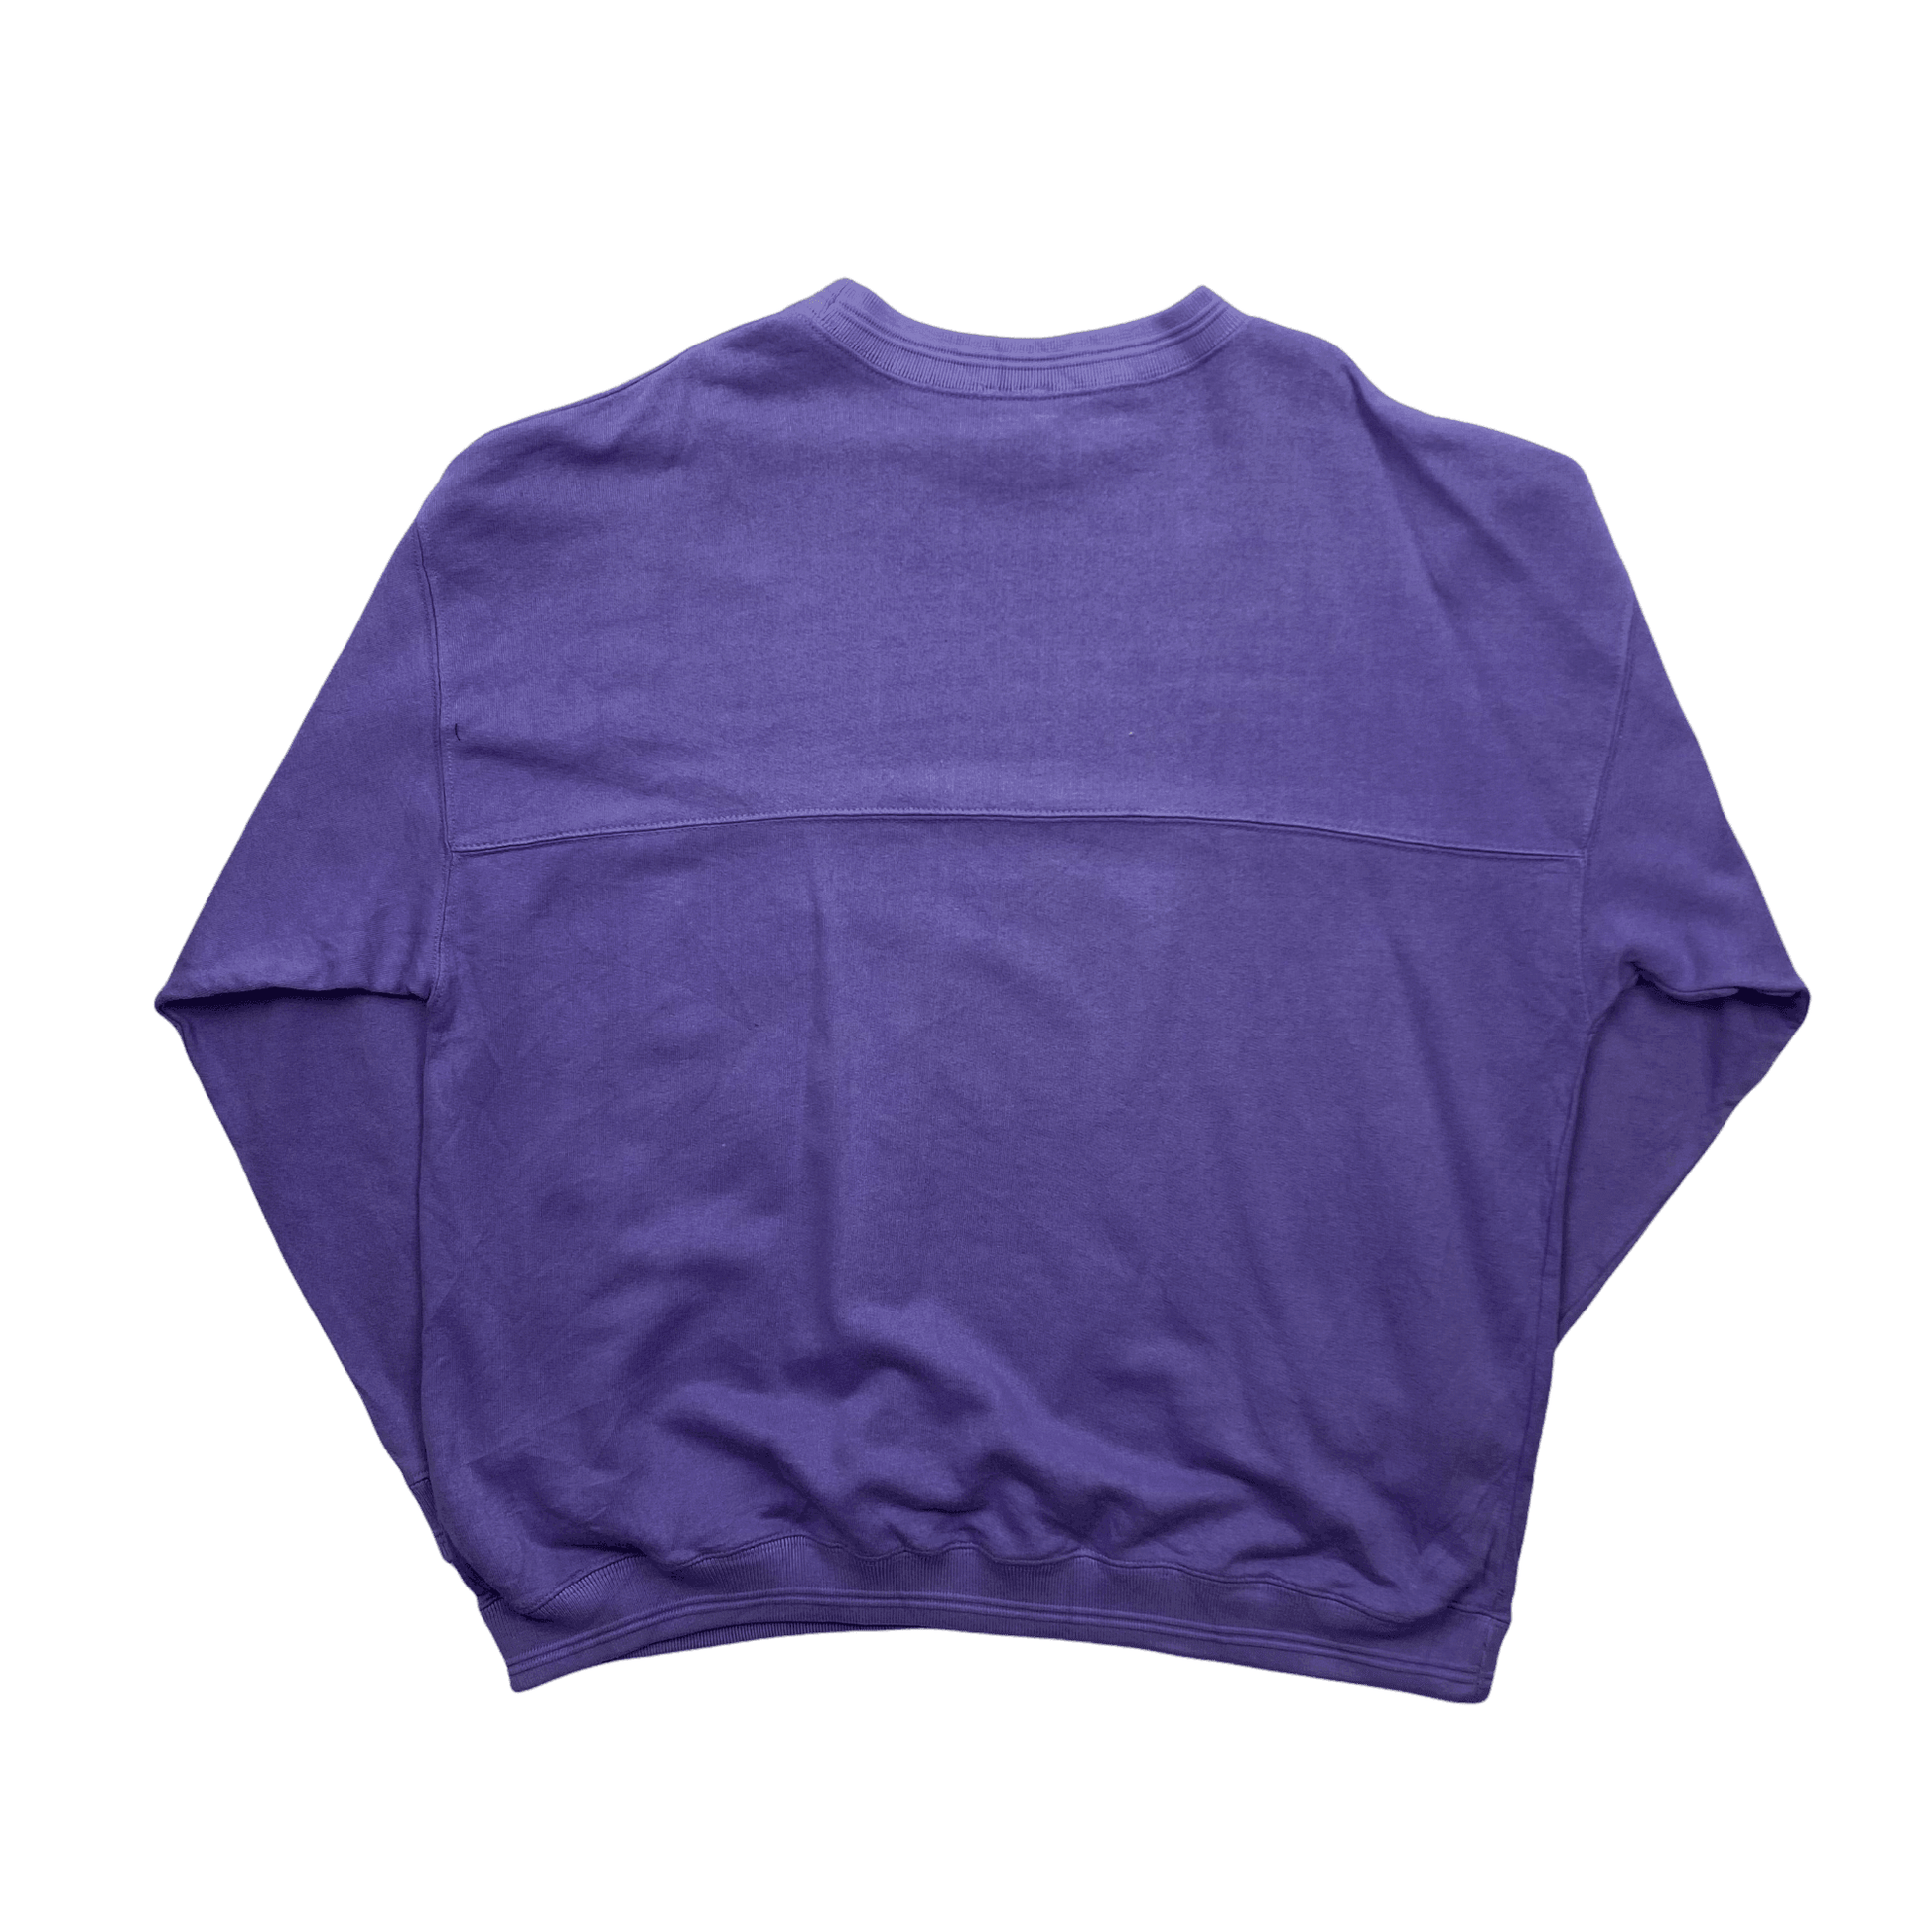 Vintage 90s Purple Nike Sweatshirt - Extra Large - The Streetwear Studio